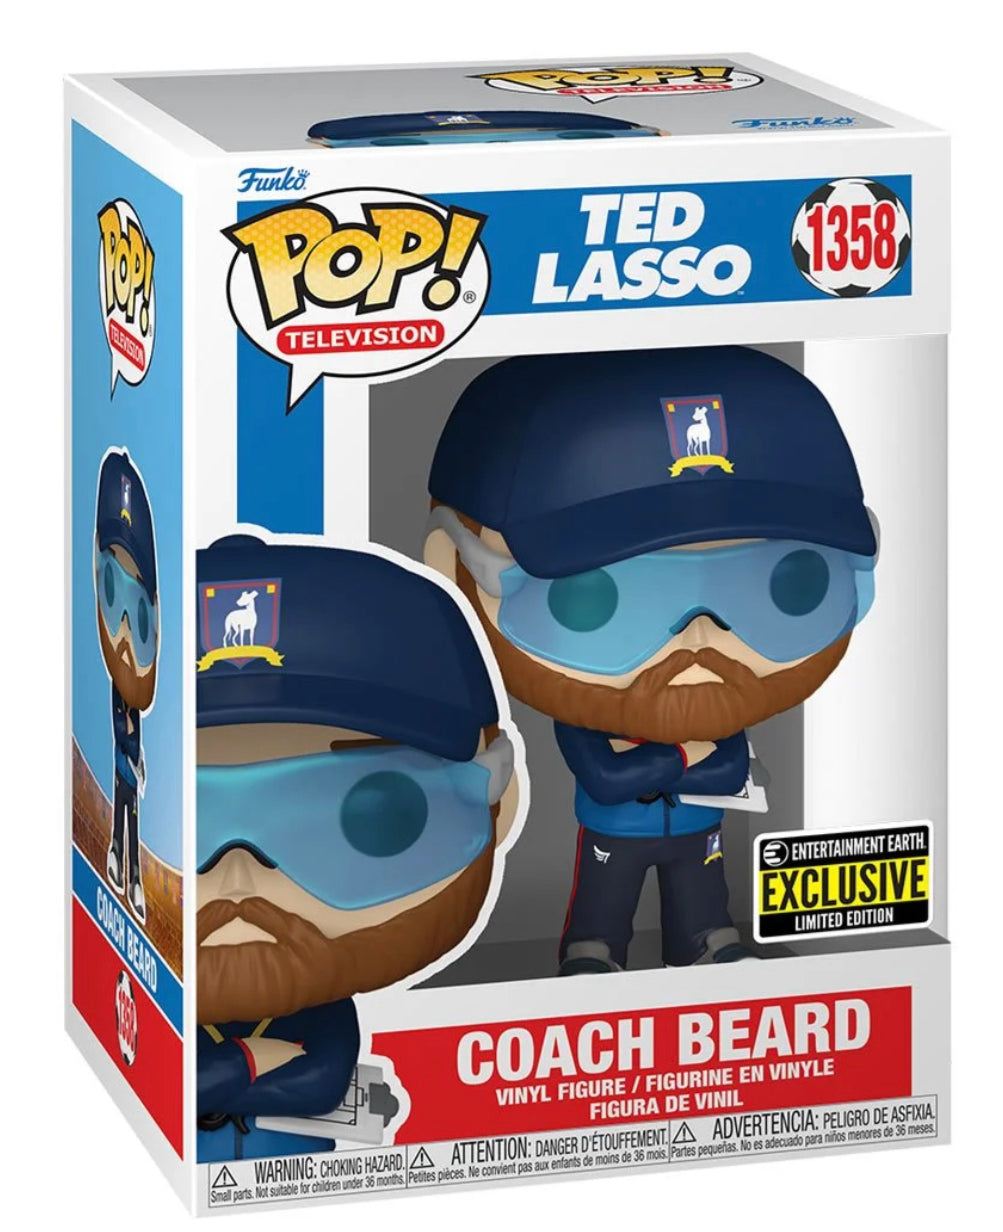 Ted Lasso - Coach Beard #1358 - Exclusive Funko Pop! Vinyl Figure (Television)